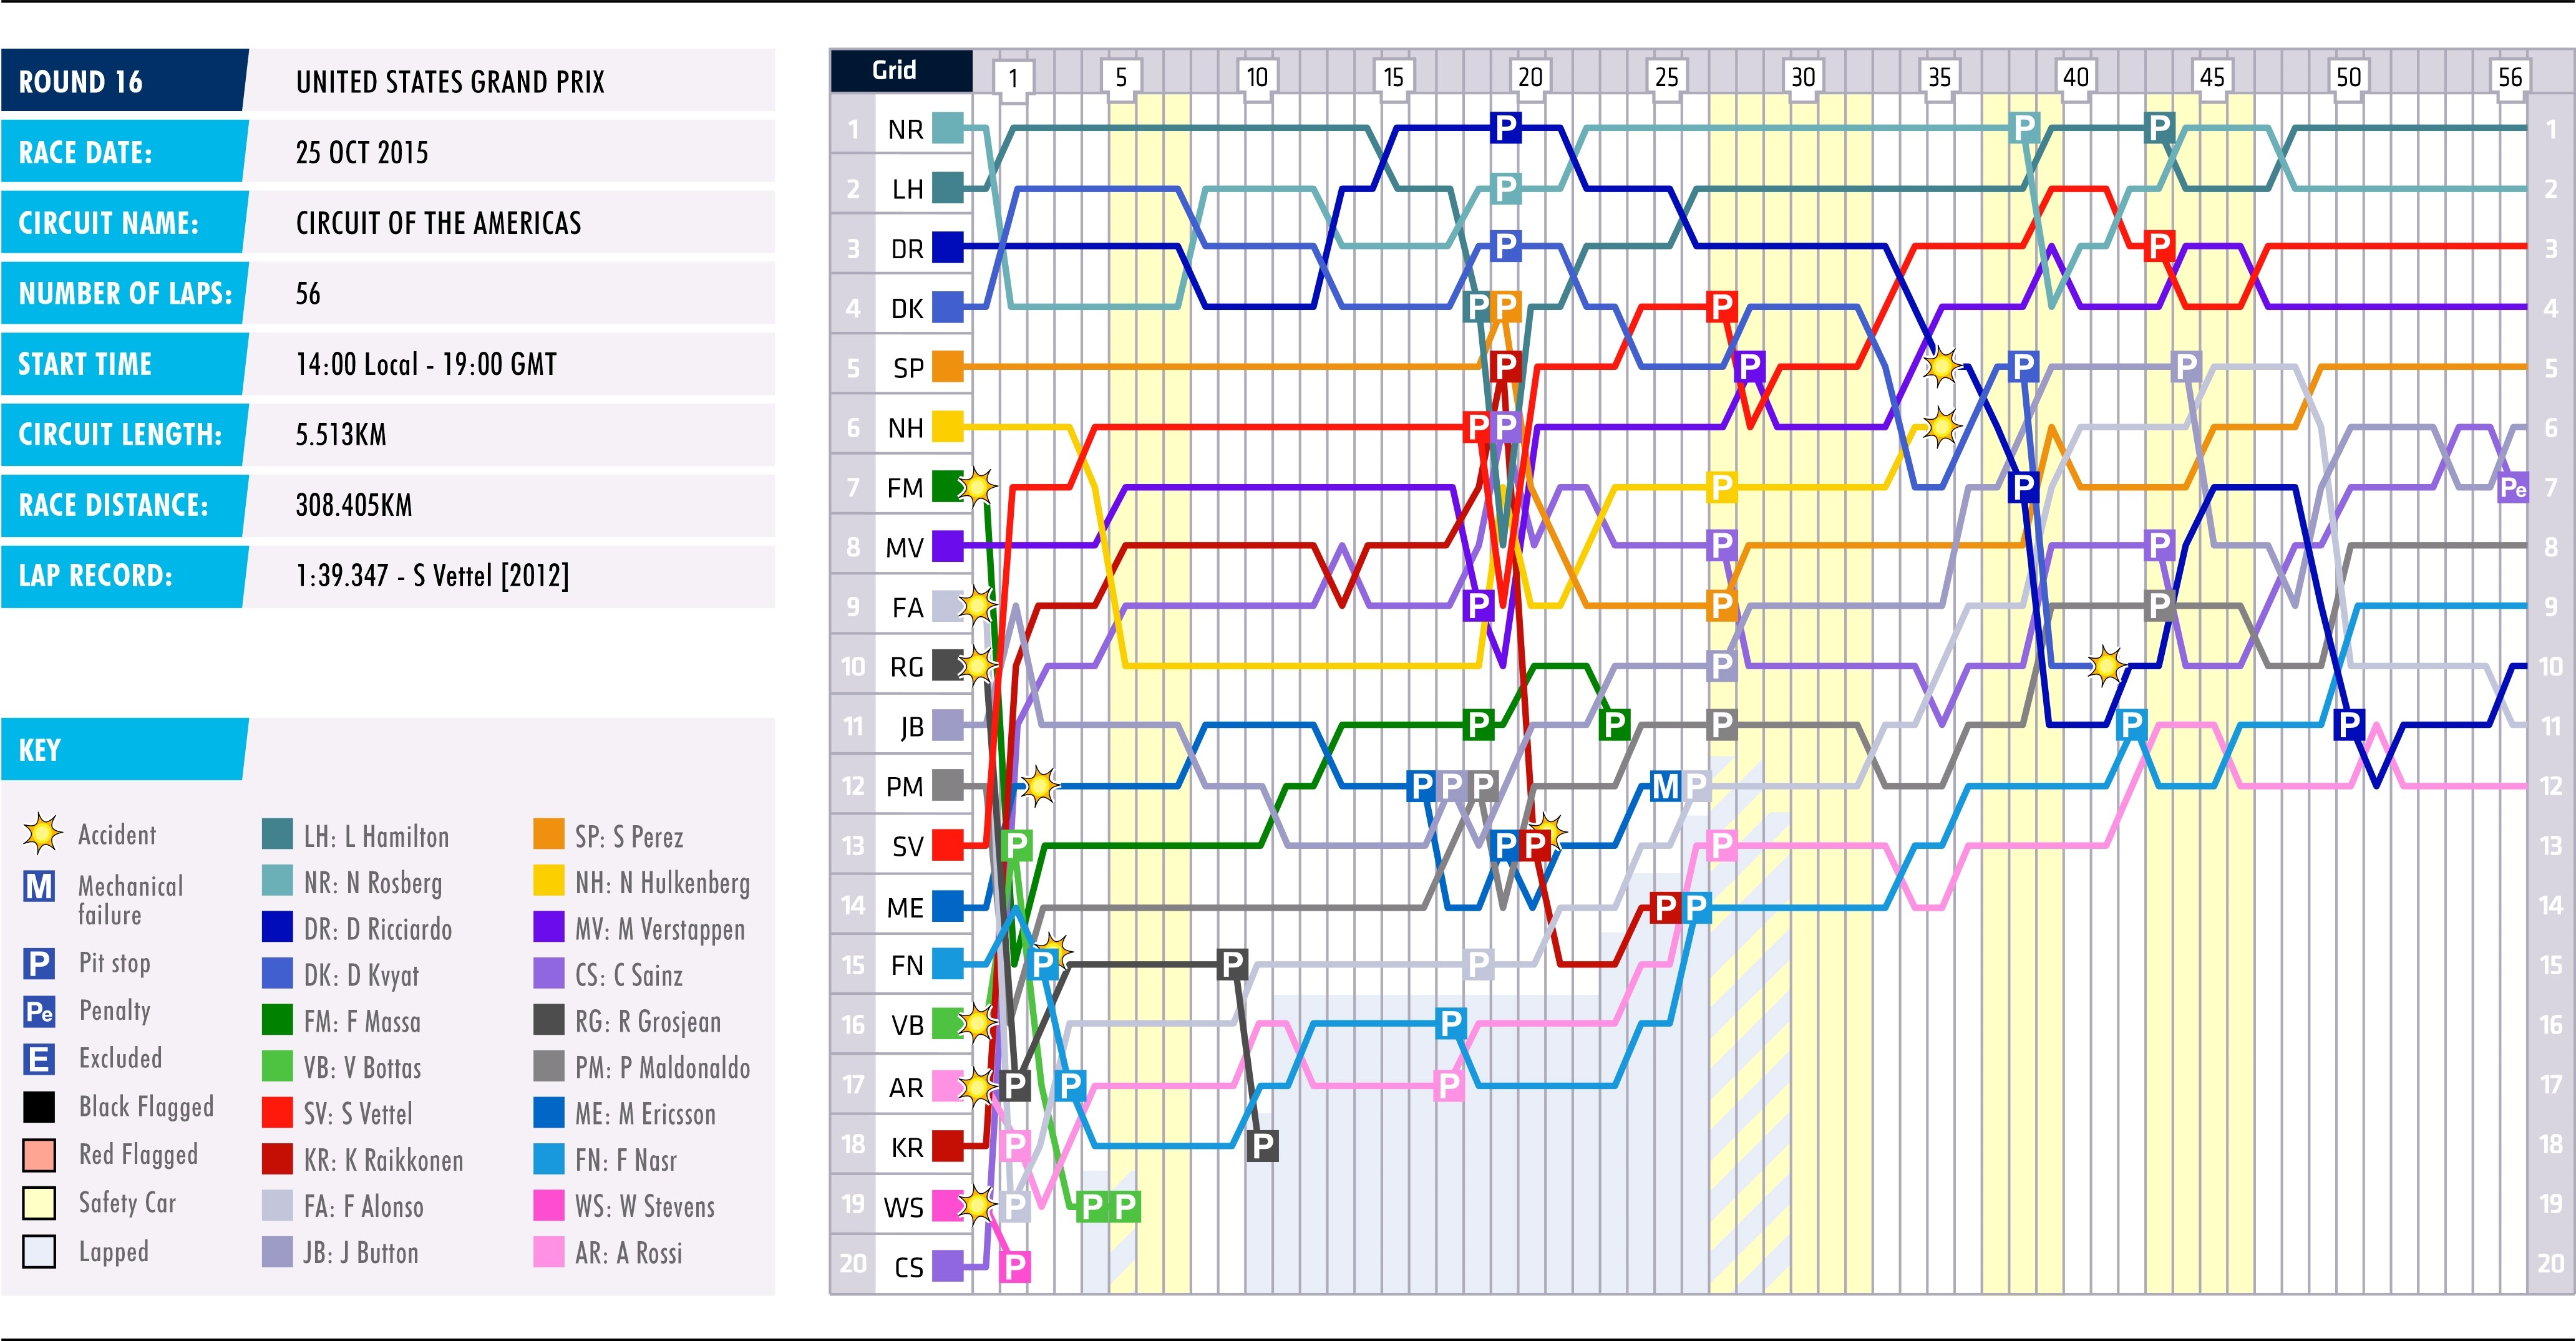 2015 United States Grand Prix - Lap Chart